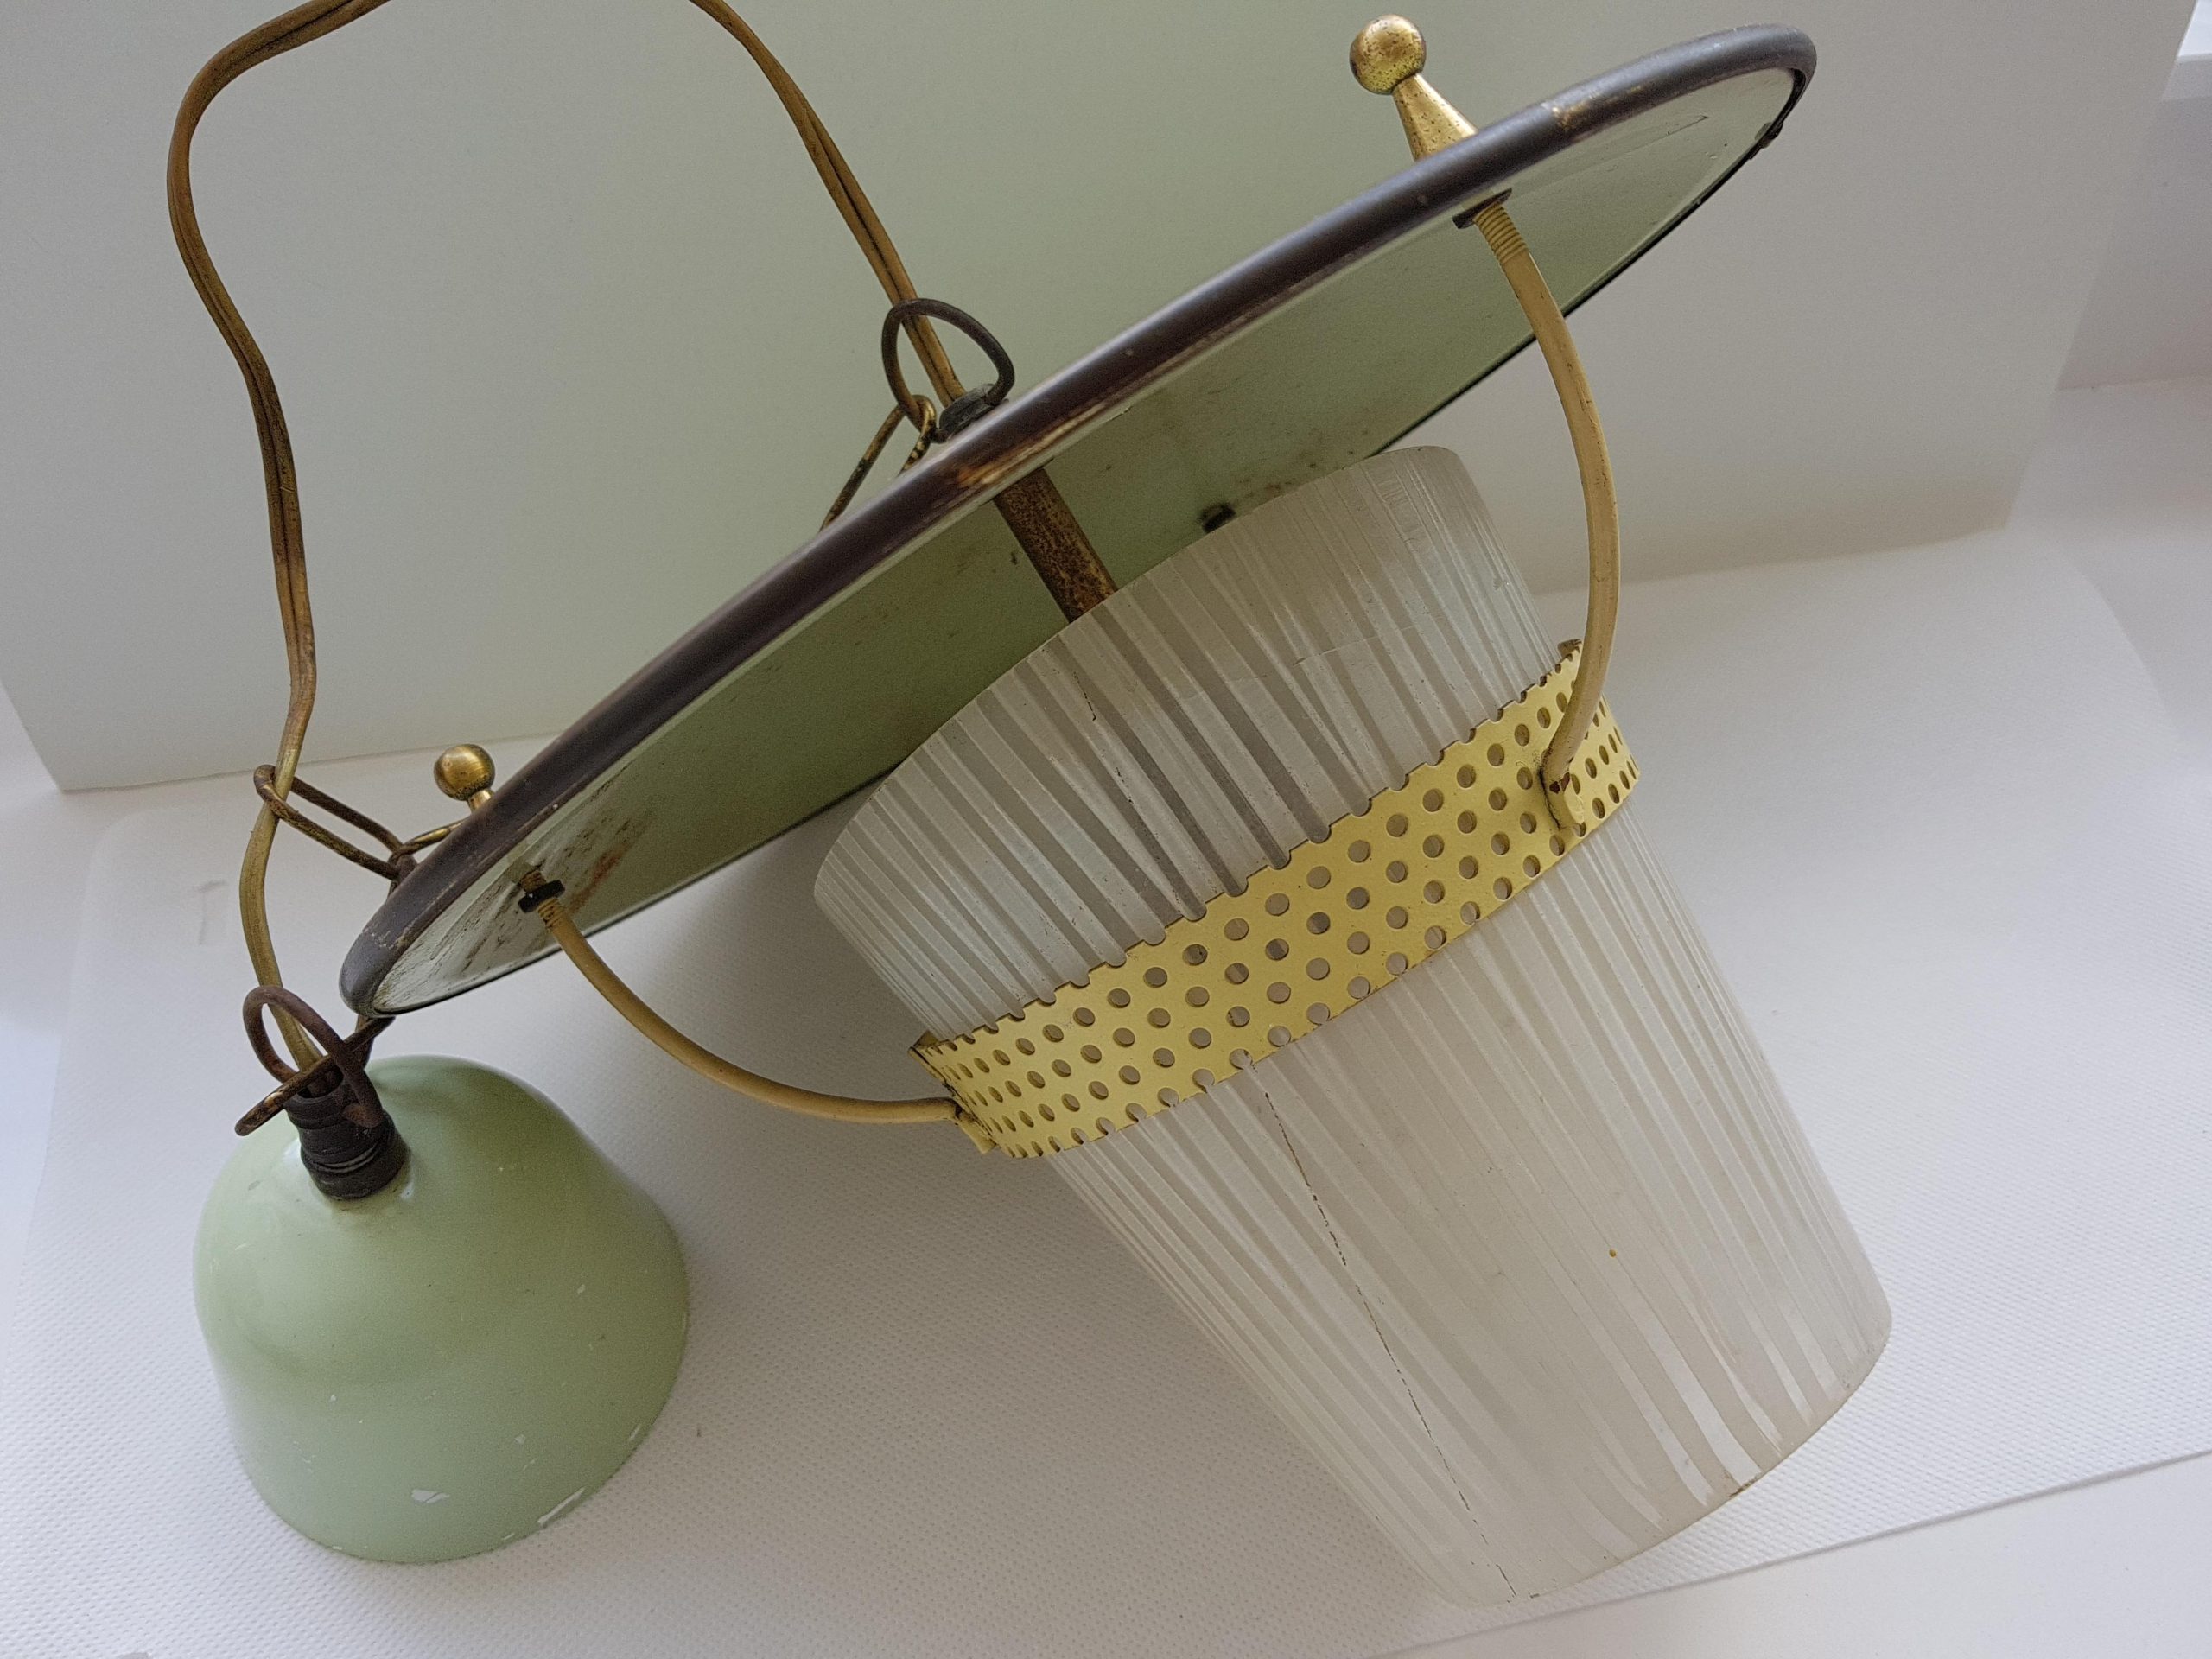 Sturen glans Bewusteloos Philips?? Vintage hanglamp . Groen met gele rand met glazen kapje. 🌺  Vintage Webshop SennaBenna